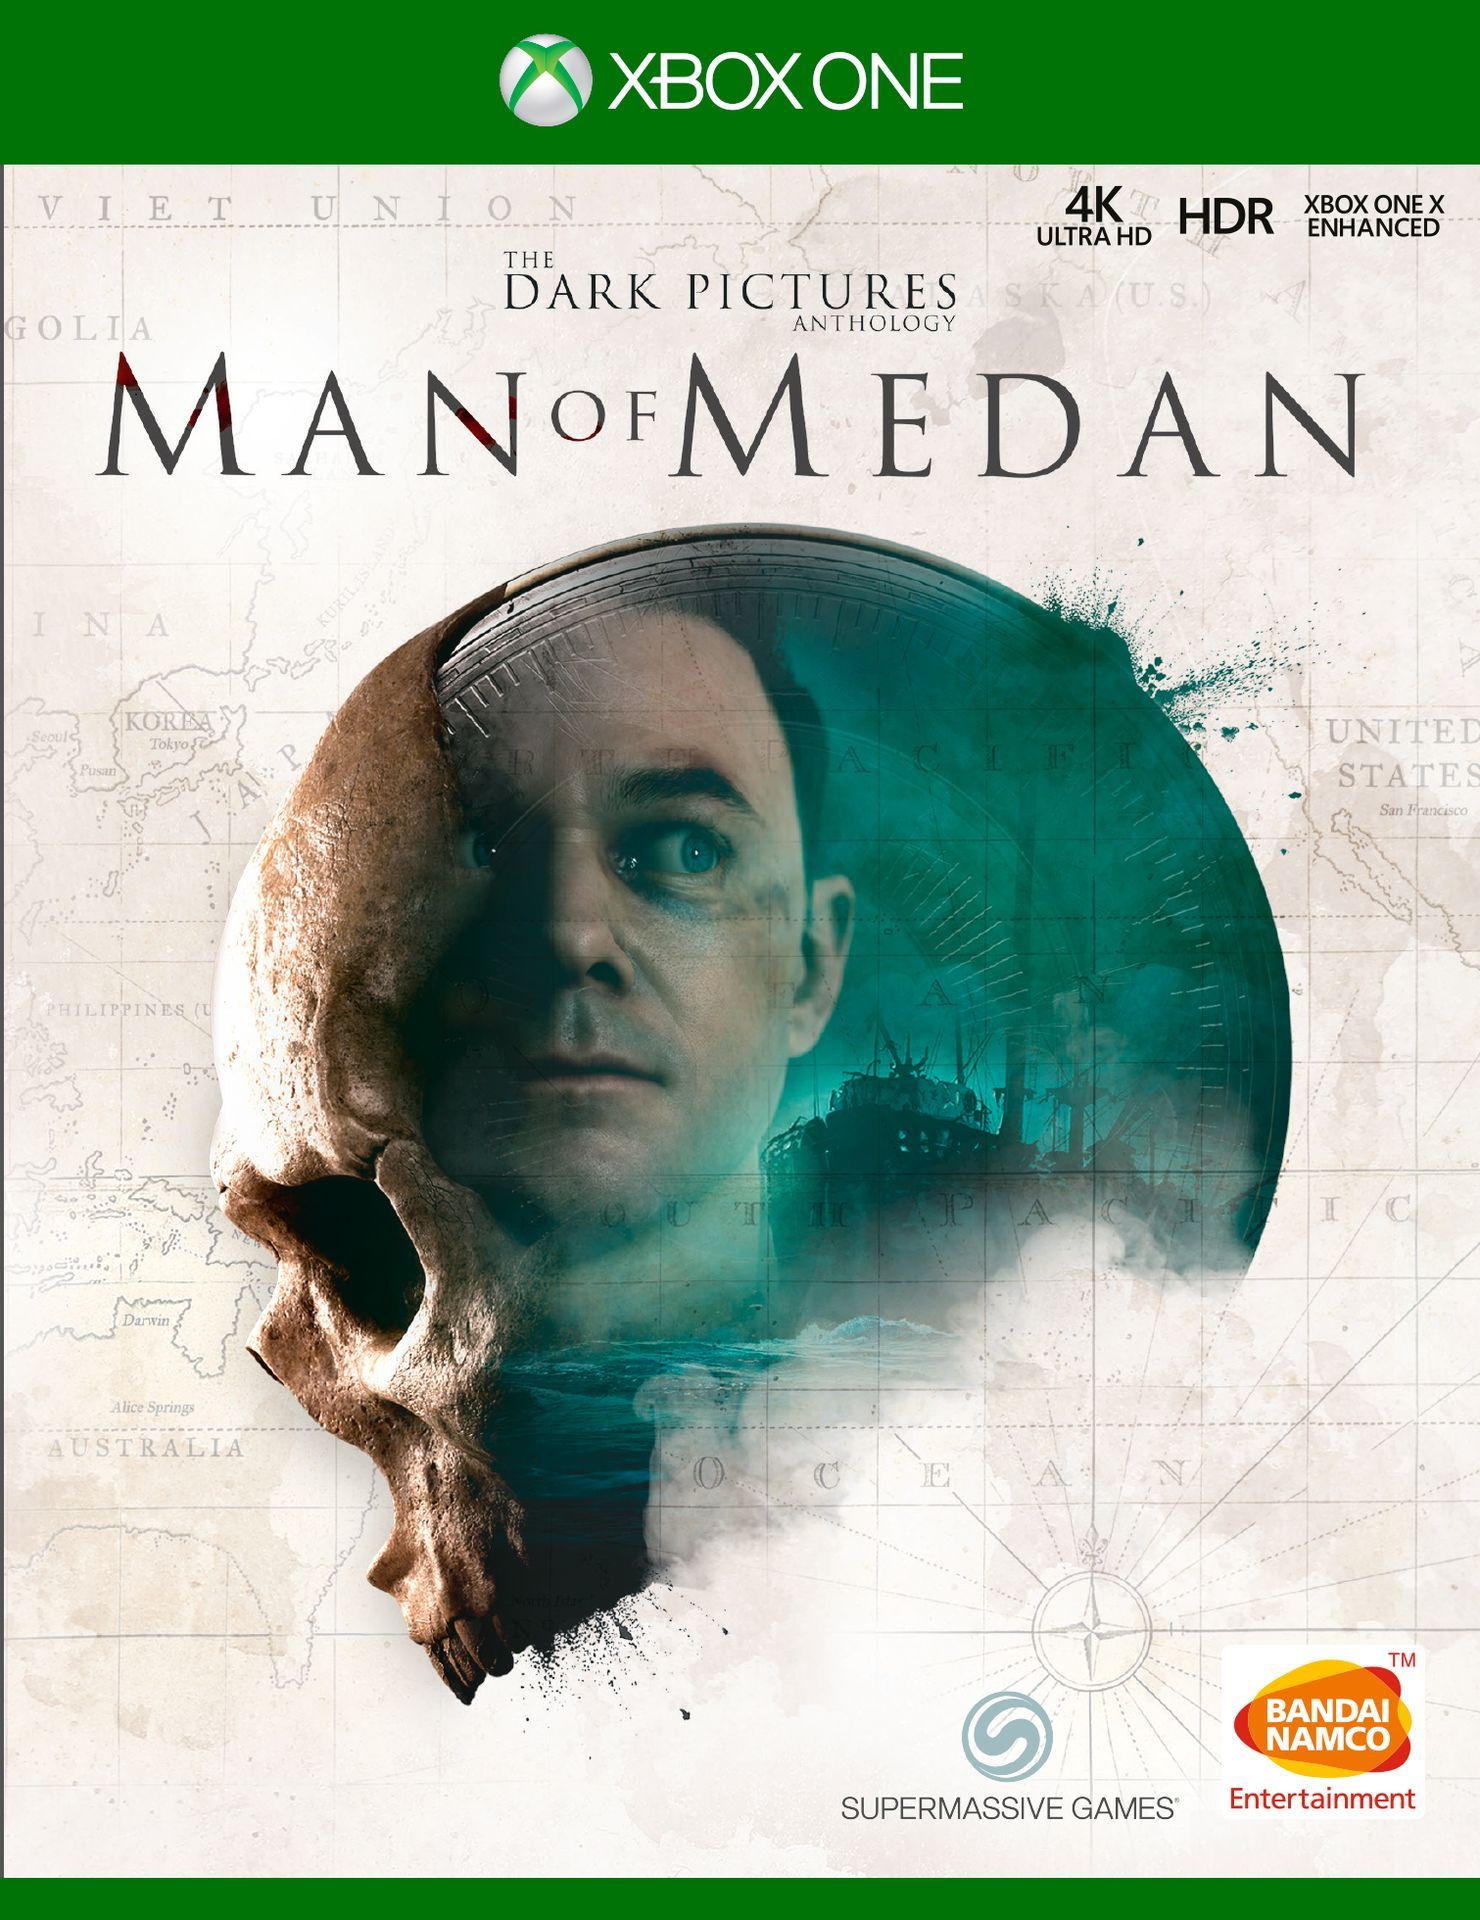 jaquette reduite de The Dark Pictures Anthology: Man of Medan sur Xbox One